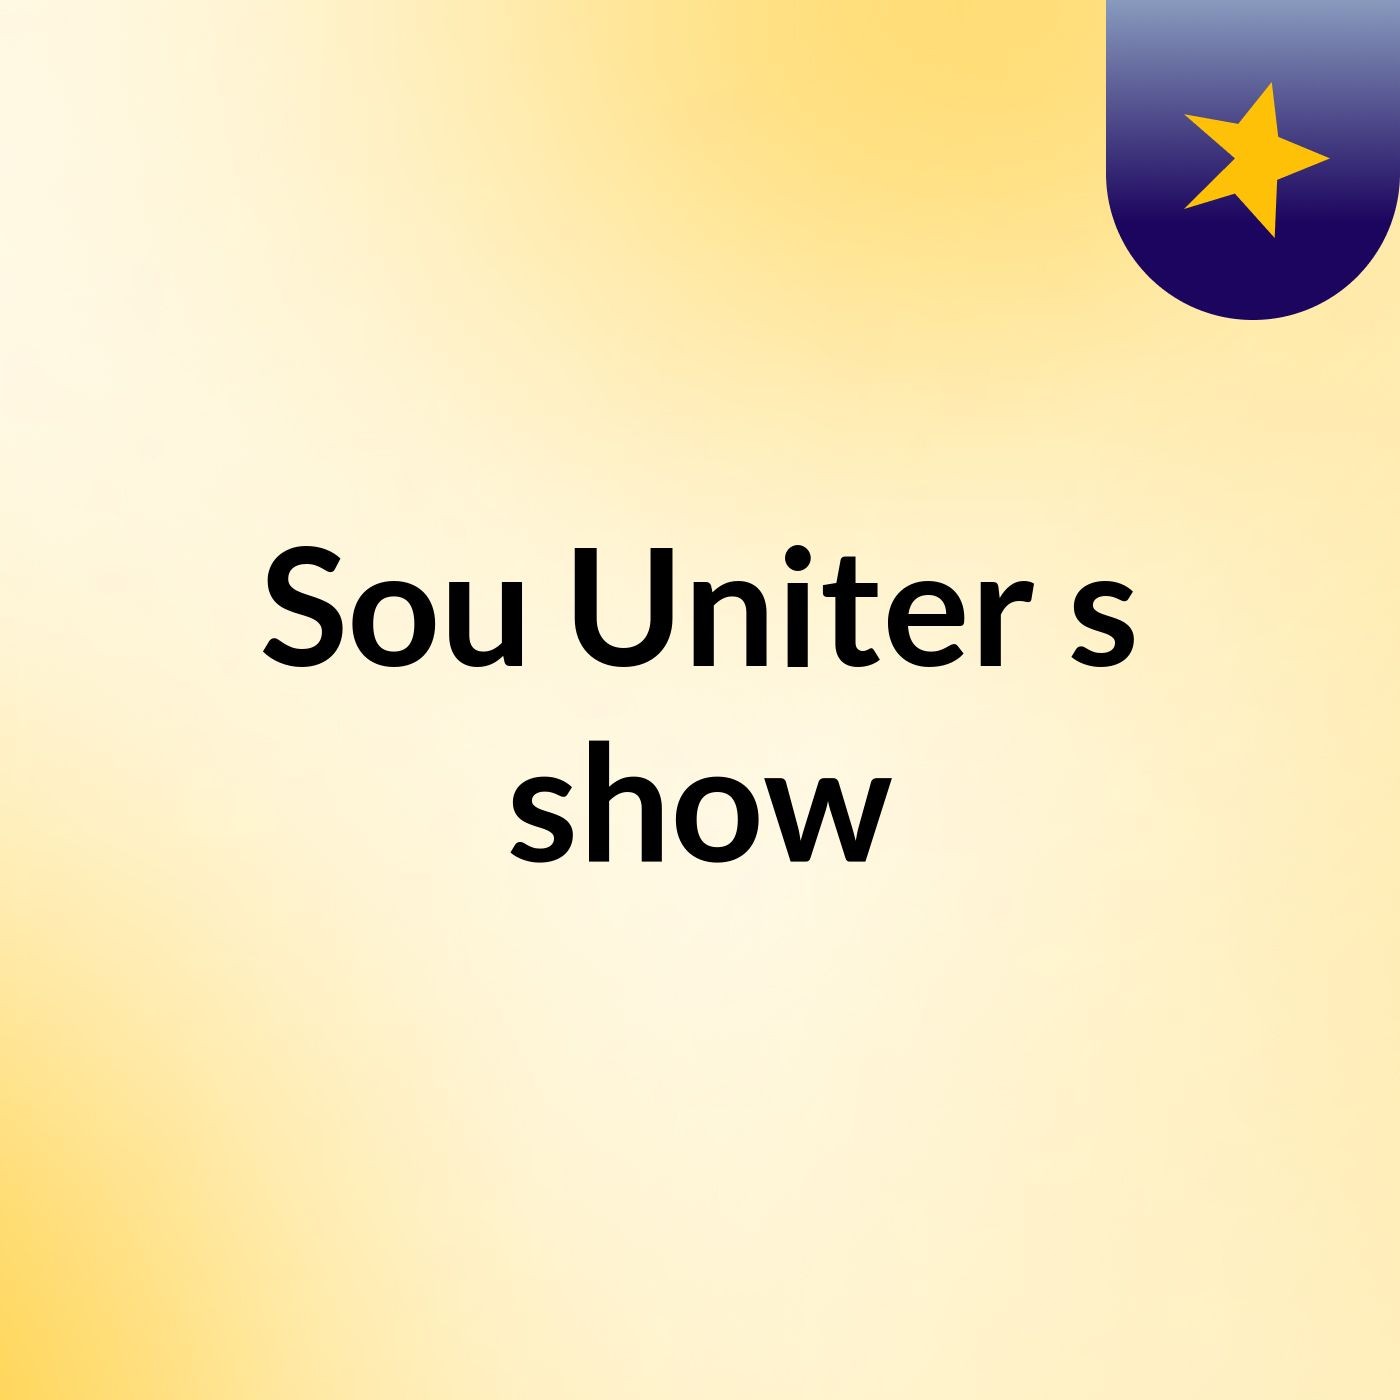 Sou Uniter's show